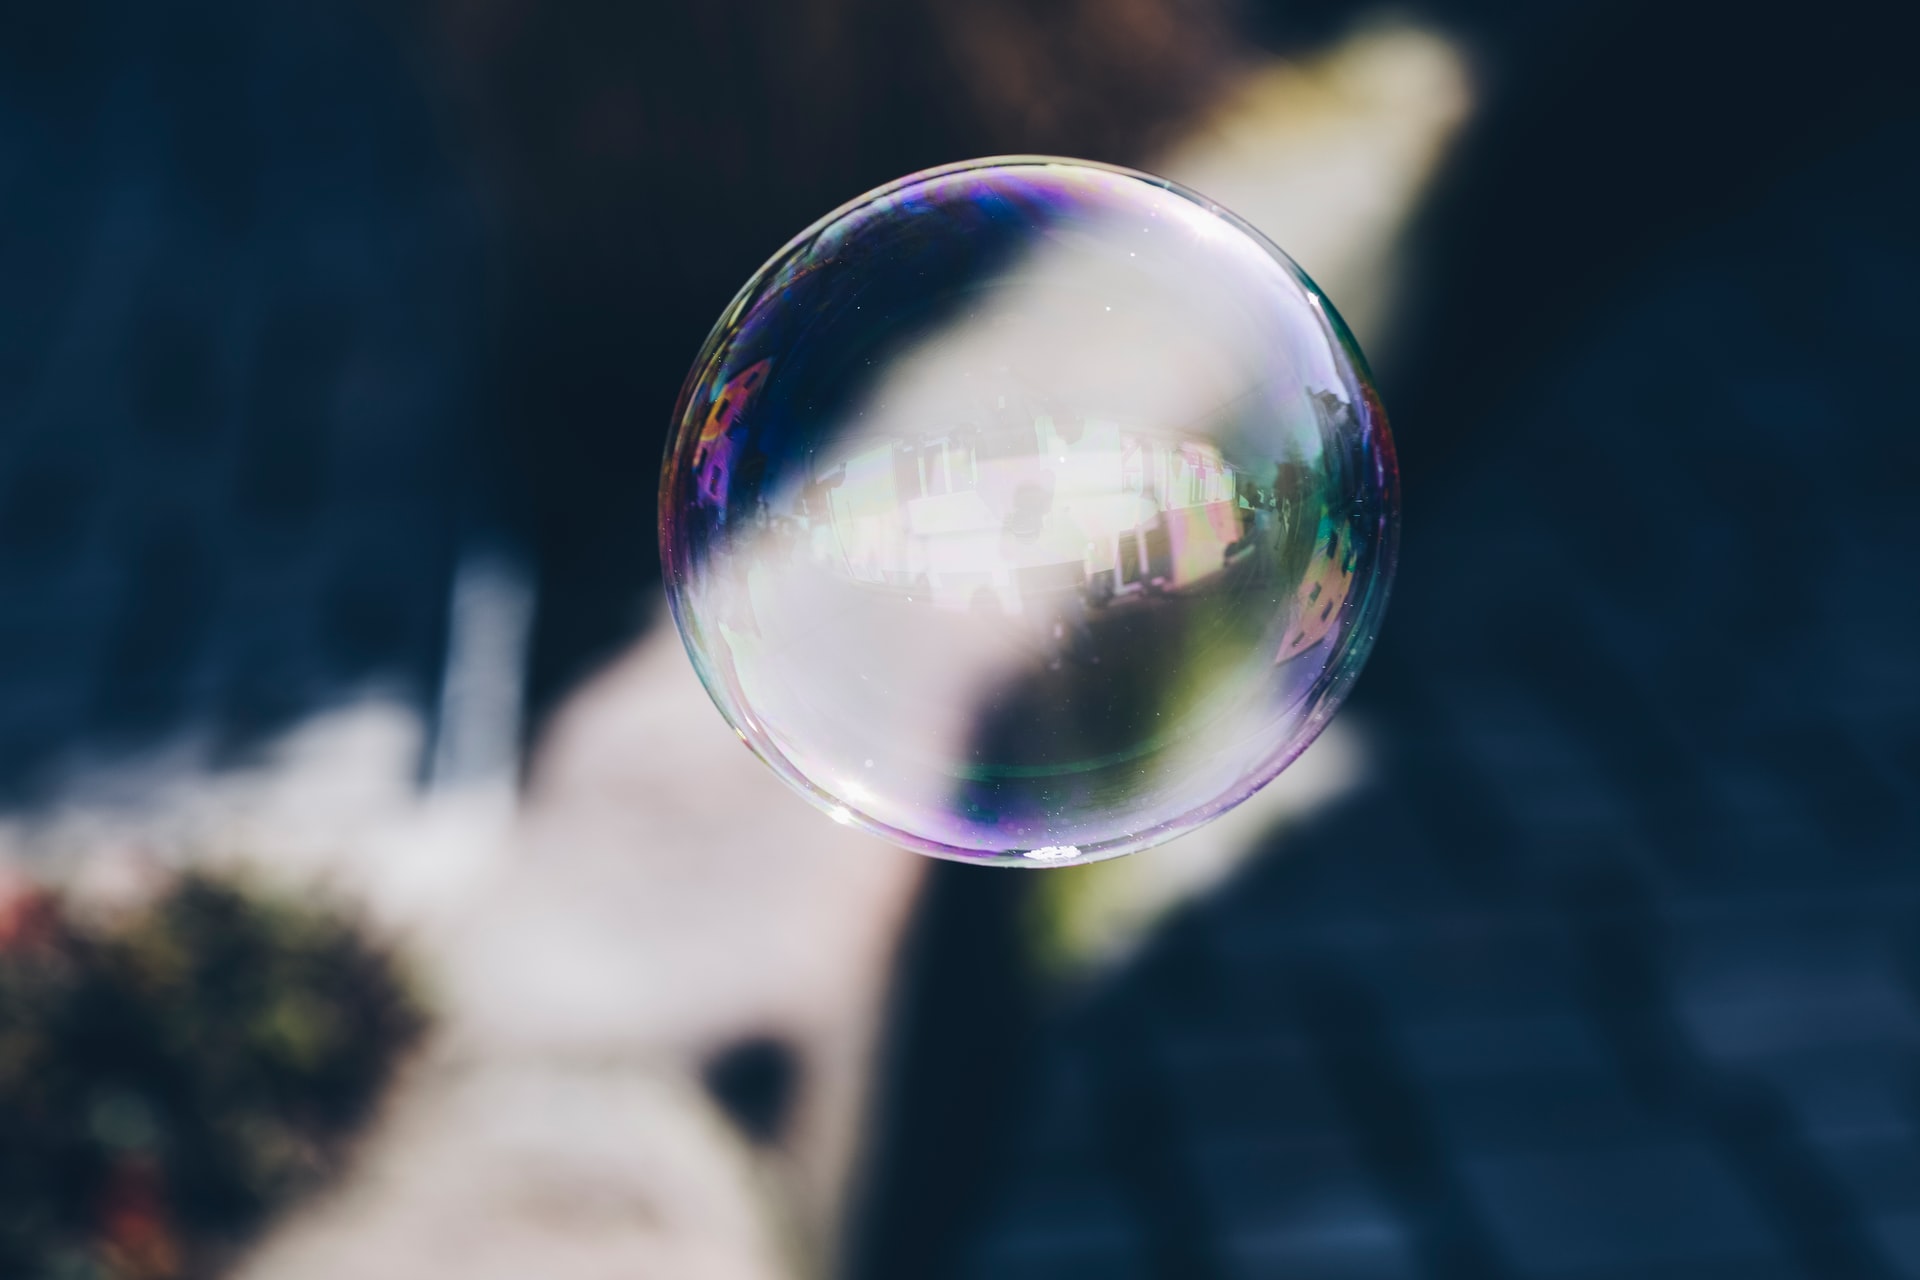 Soap bubble, Photo by Markus Spiske on Unsplash